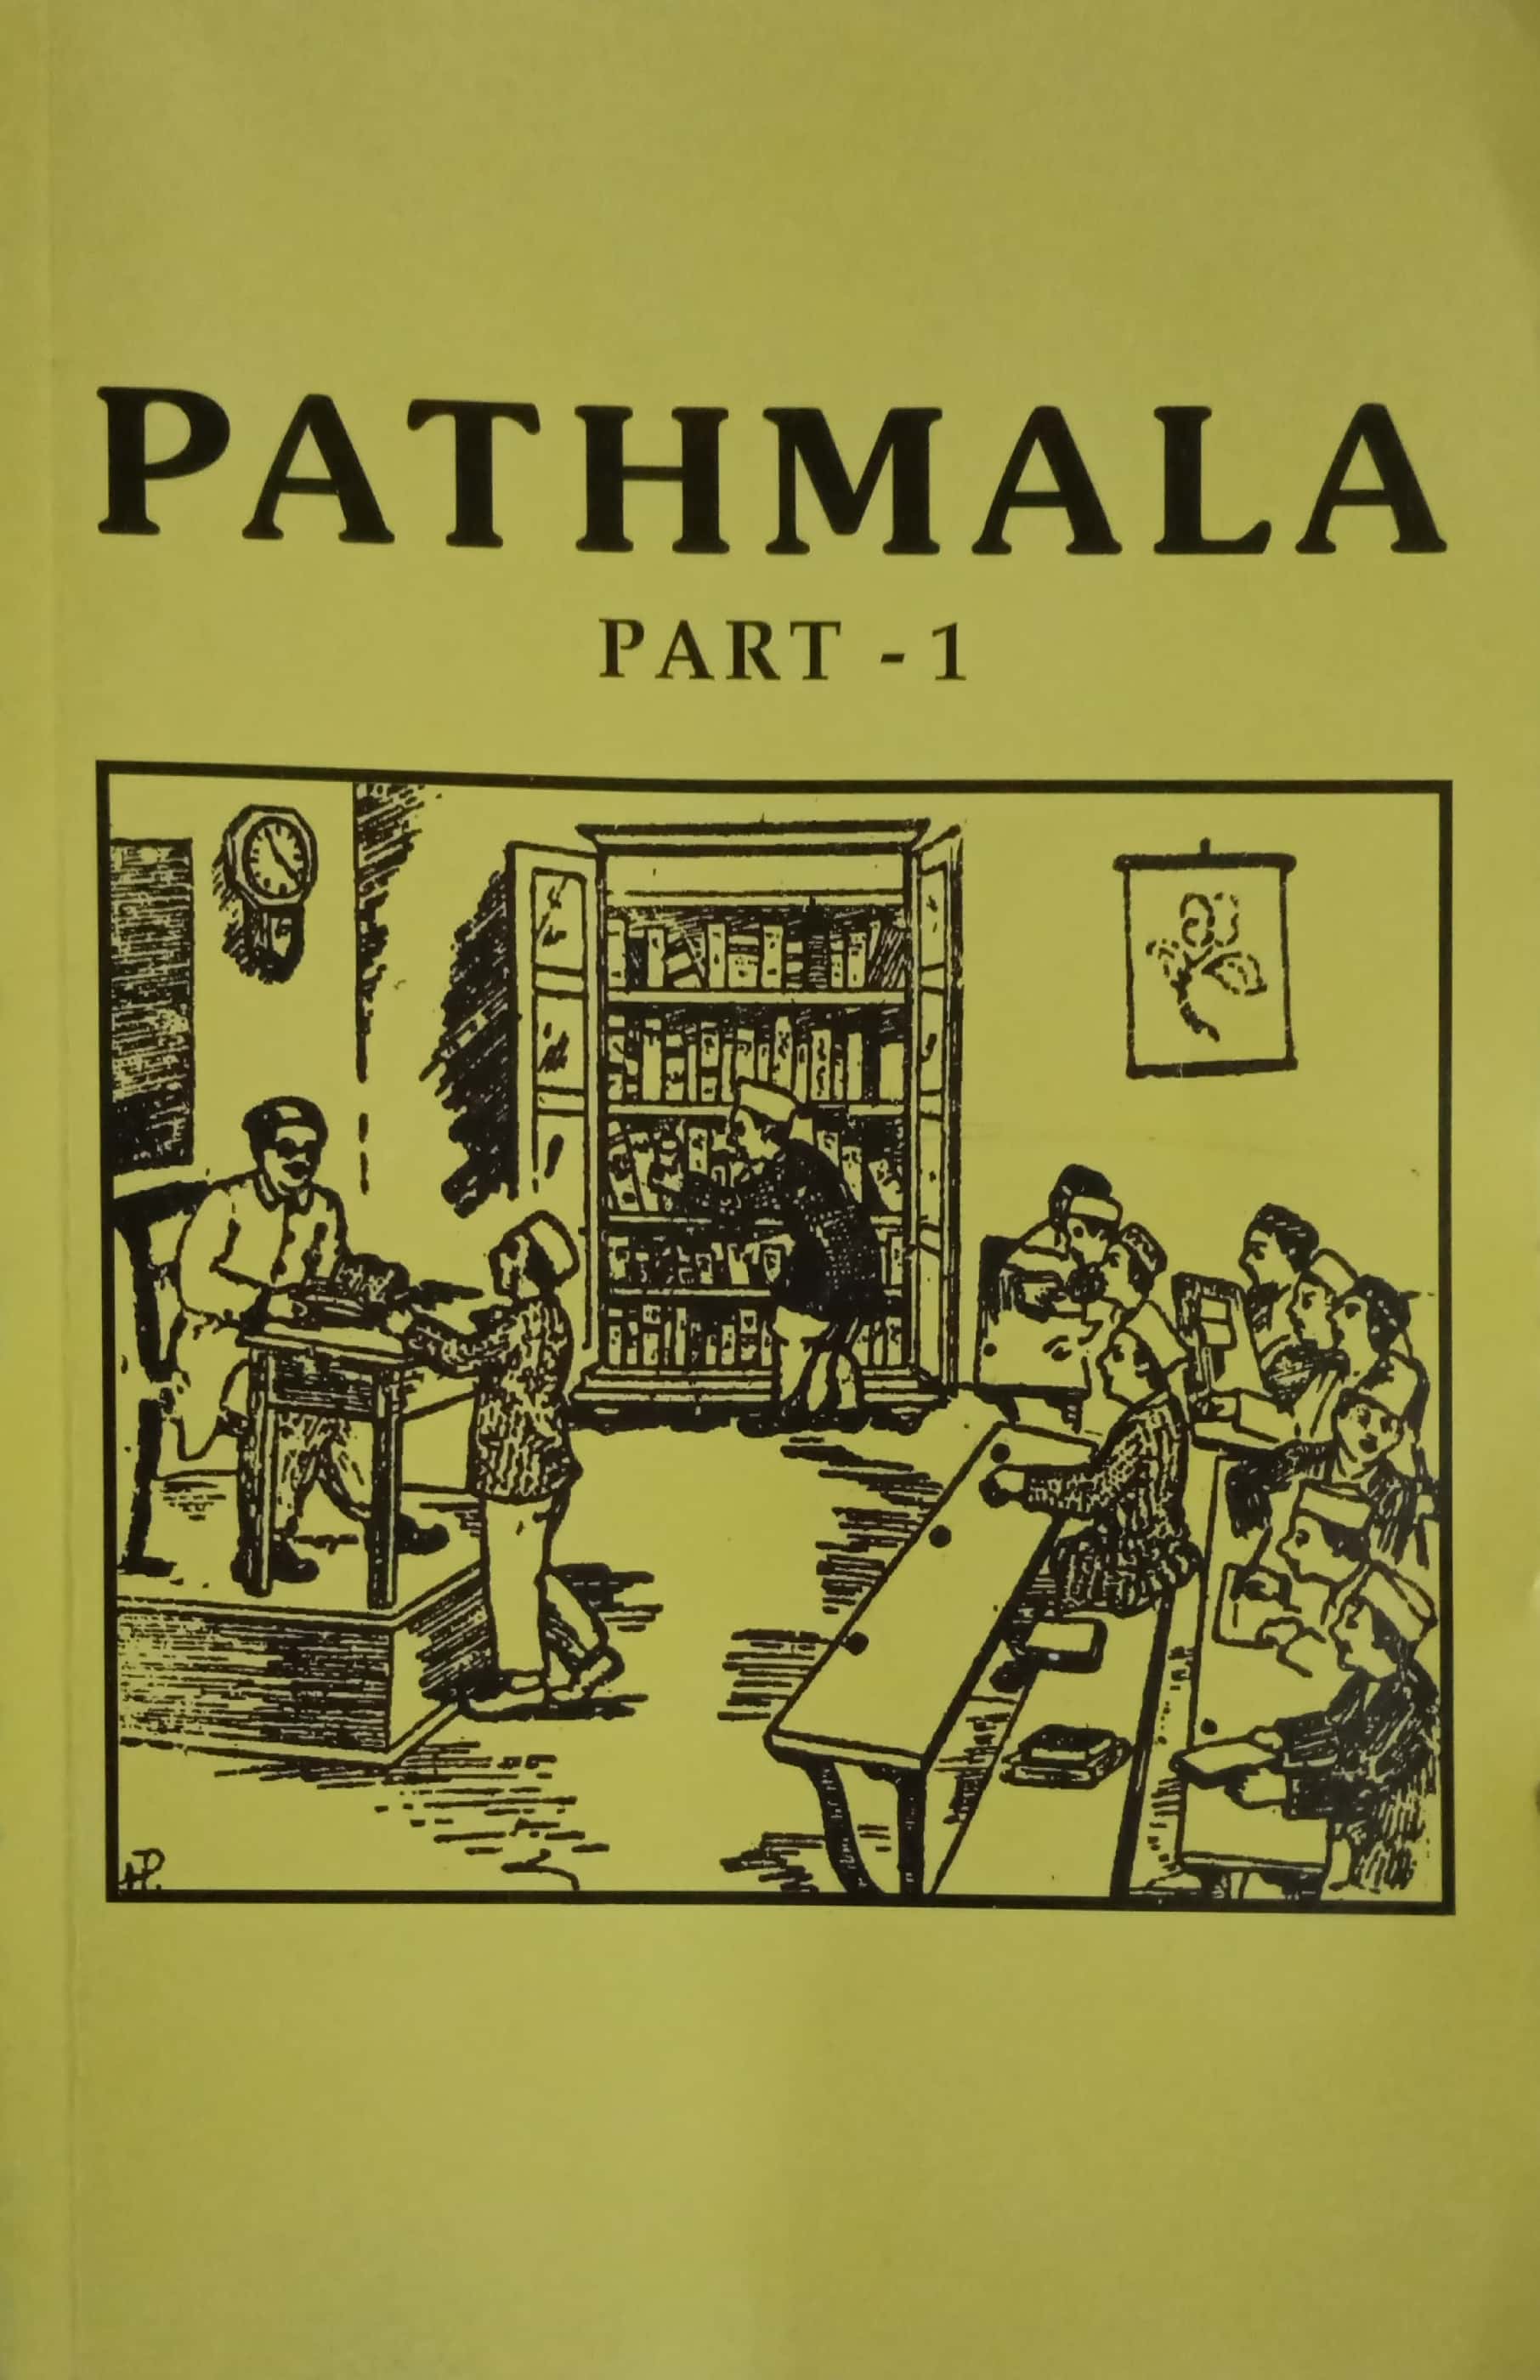 PATHMALA-5 book seert